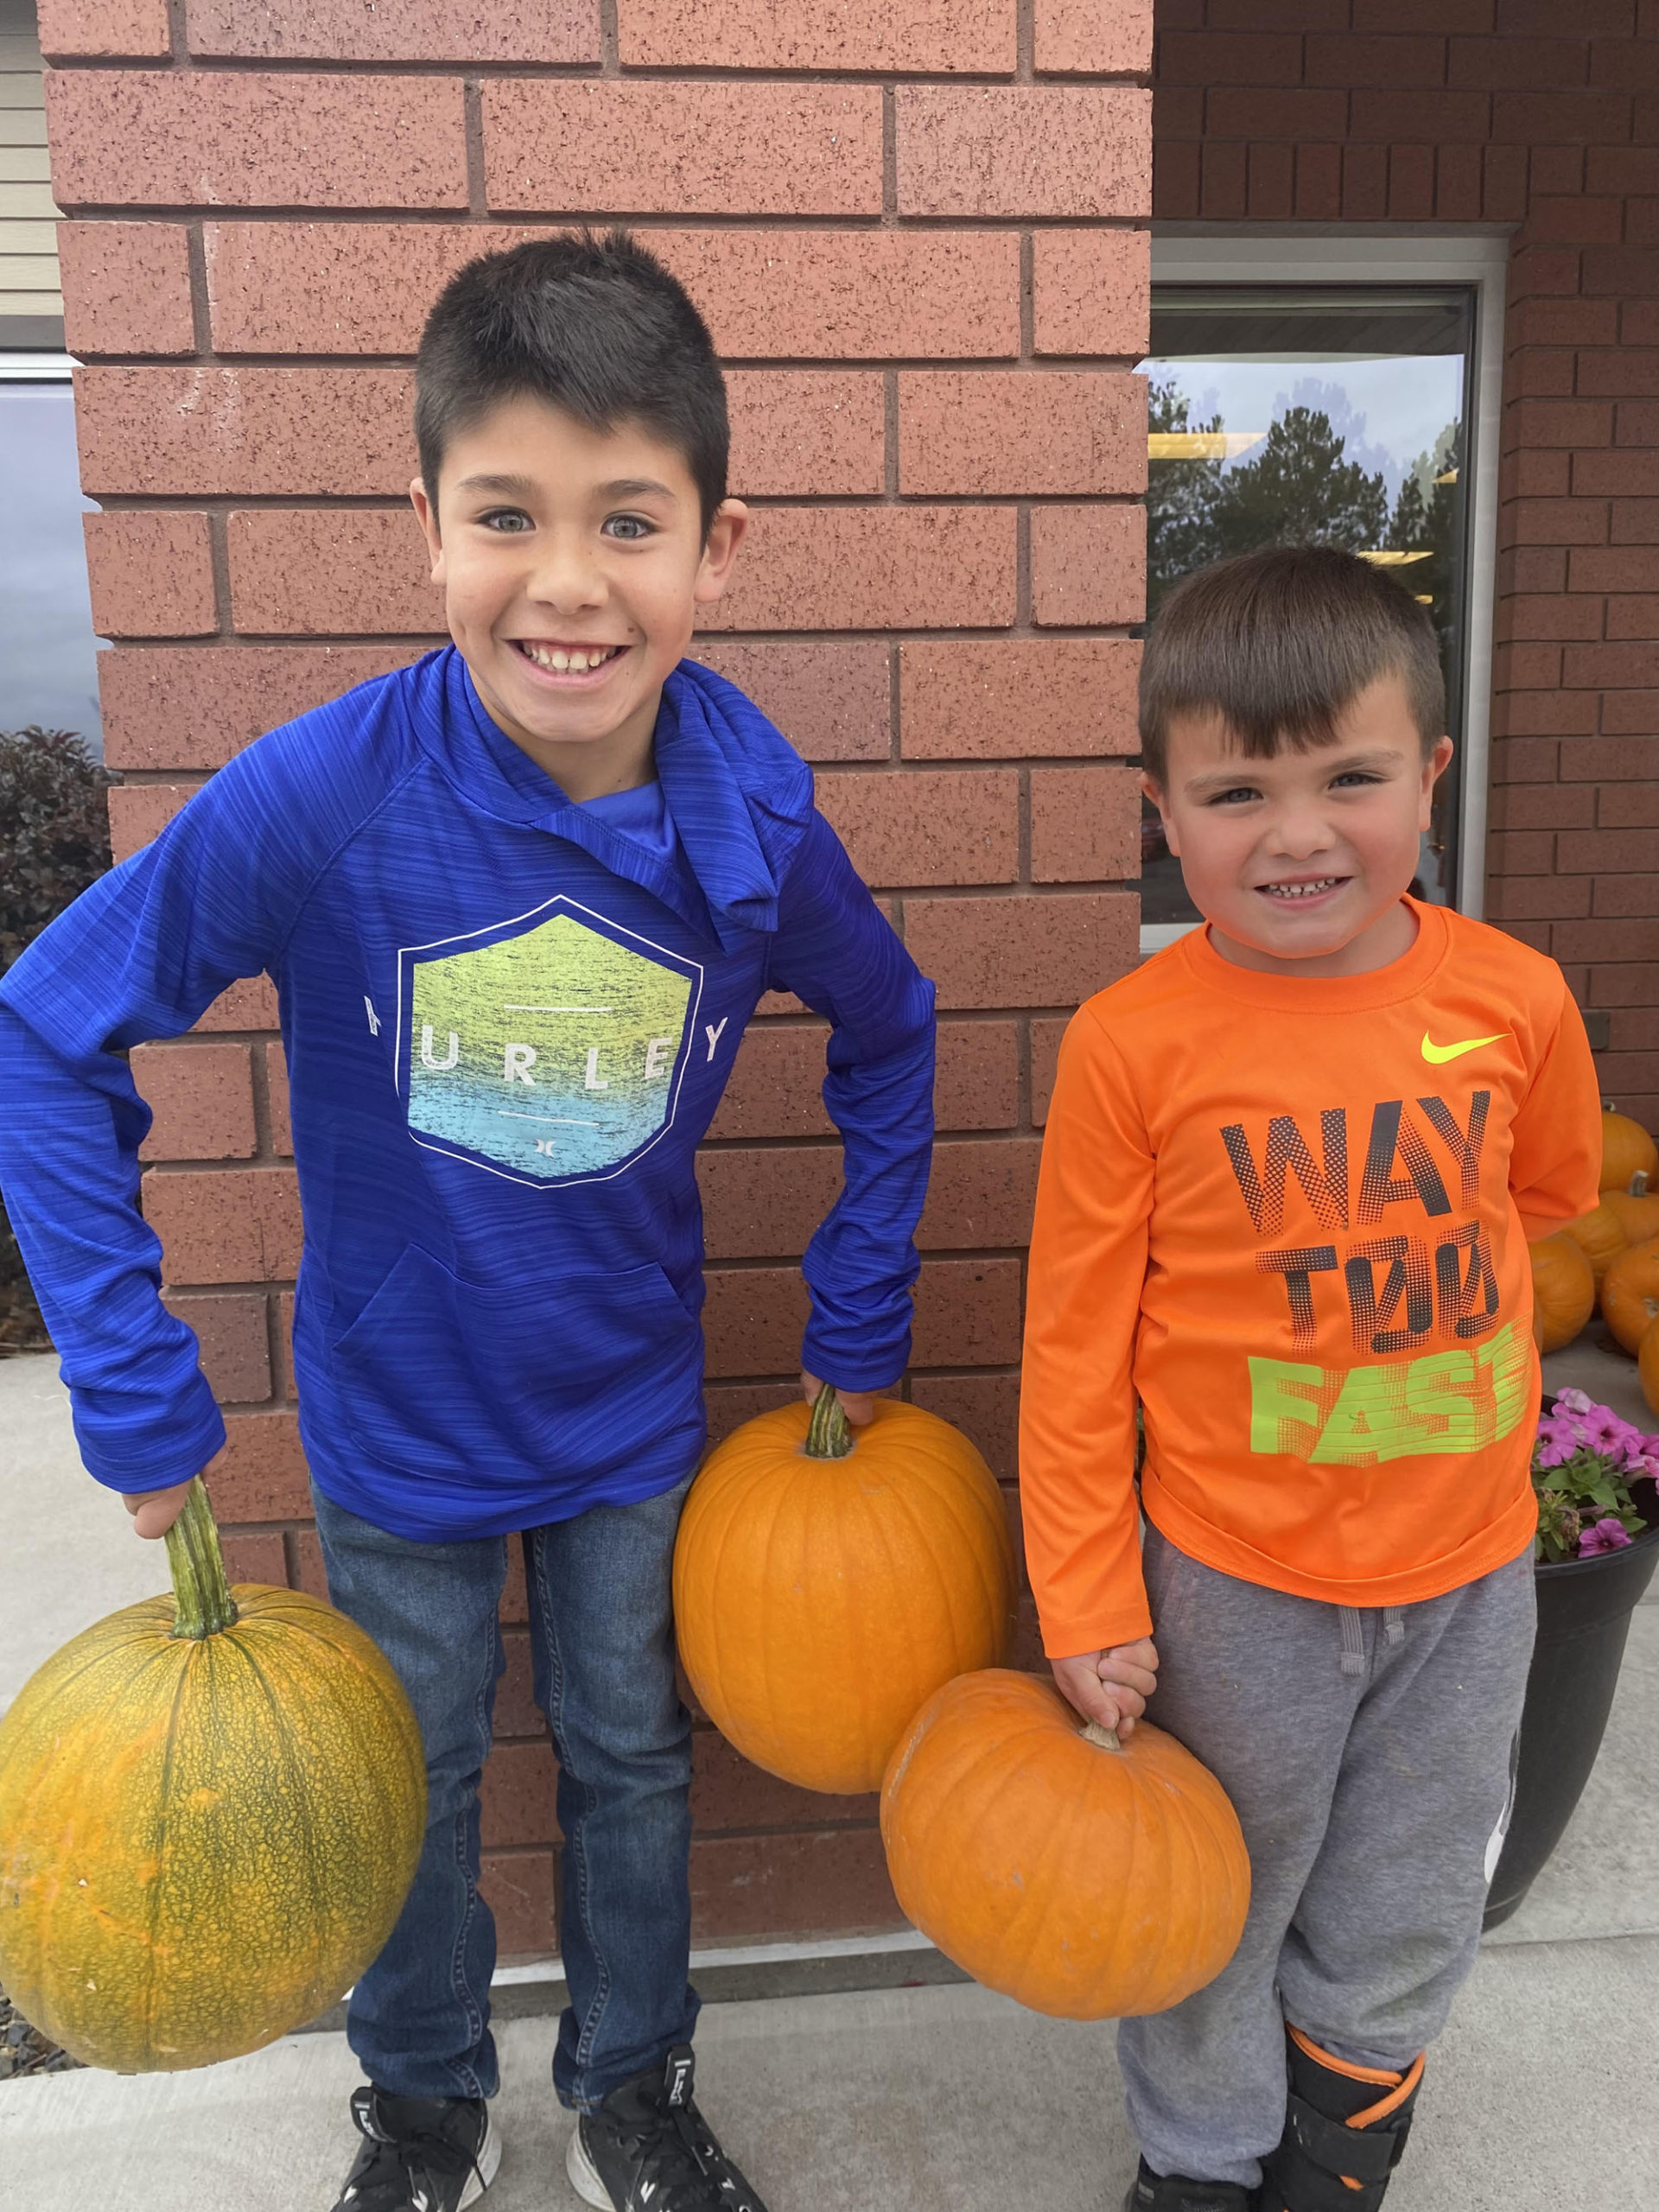 Boys holding pumpkins in after school activities in Buhl, ID.